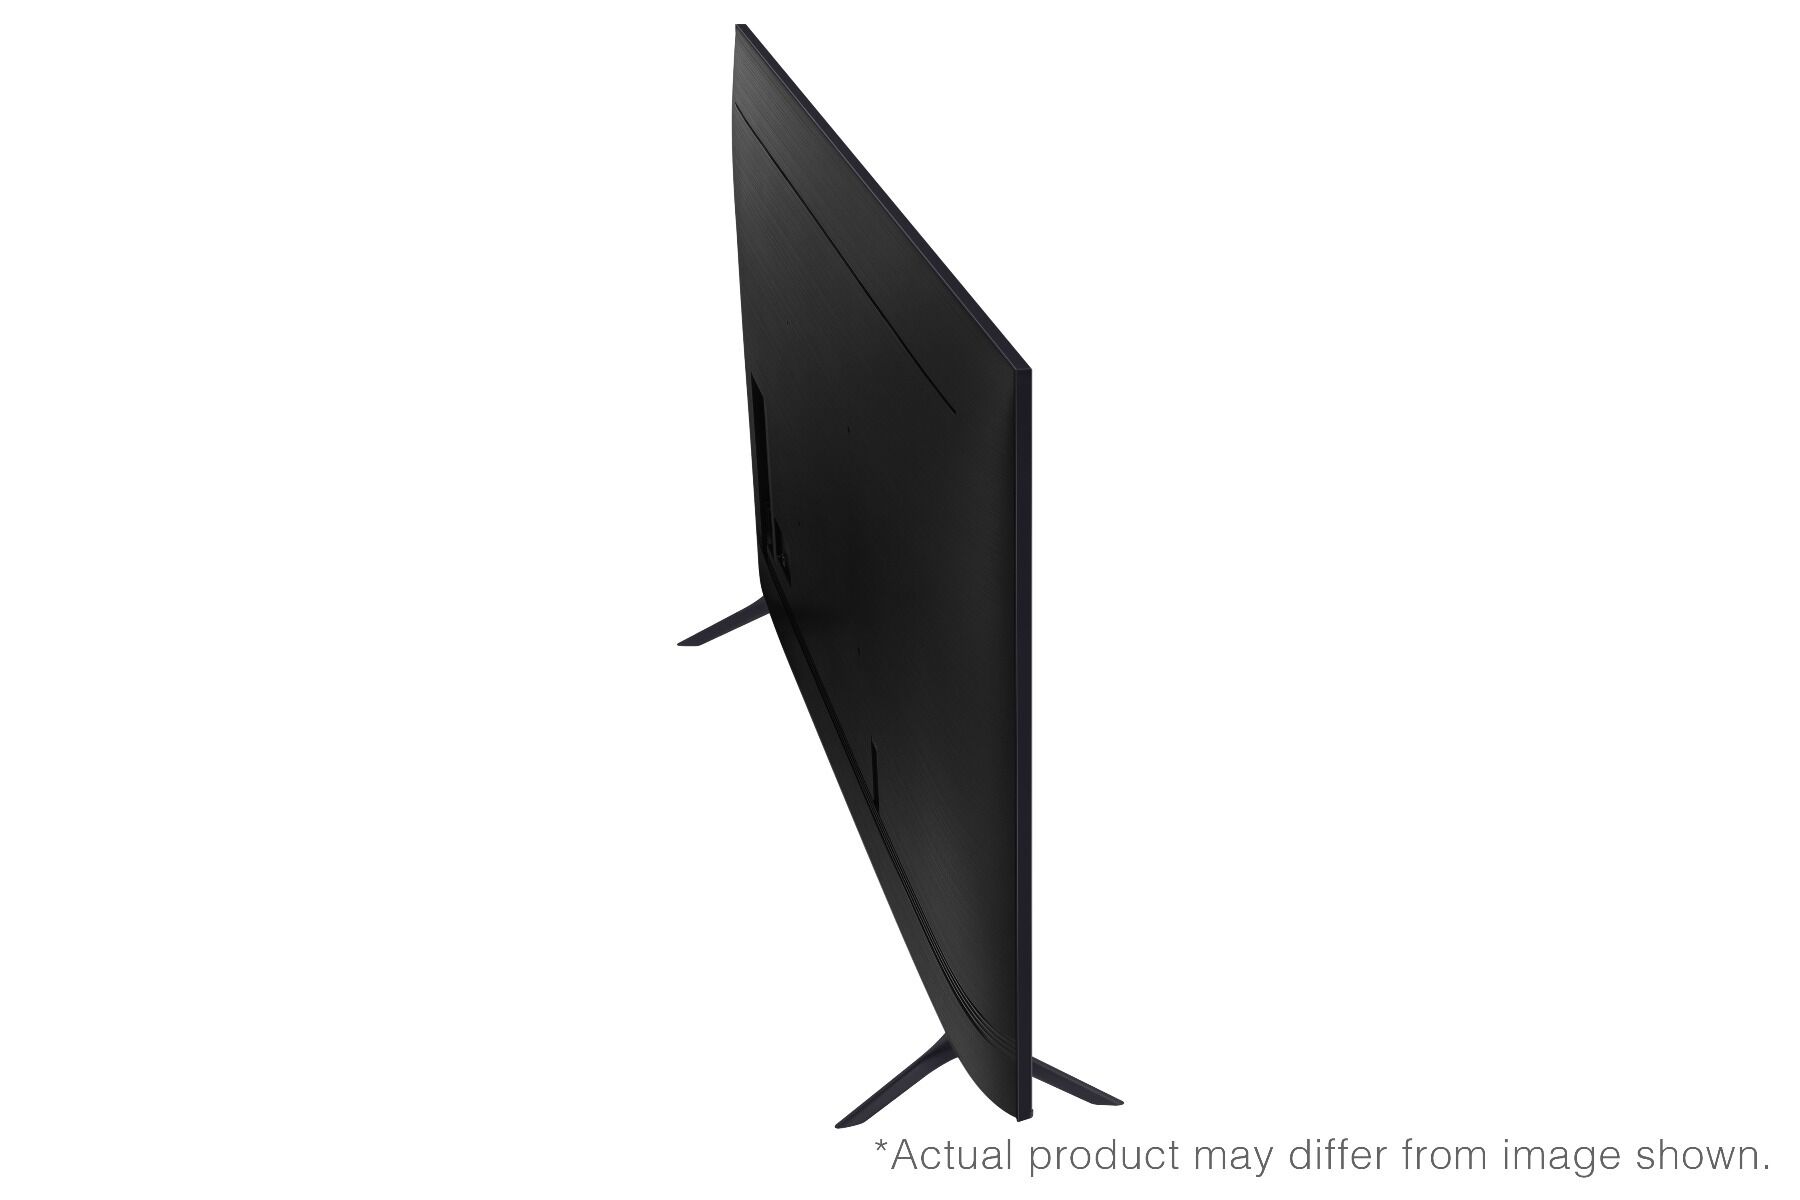 Televizor Smart LED Samsung 75AU7172, 189 cm, 4K Ultra HD, Clasa G